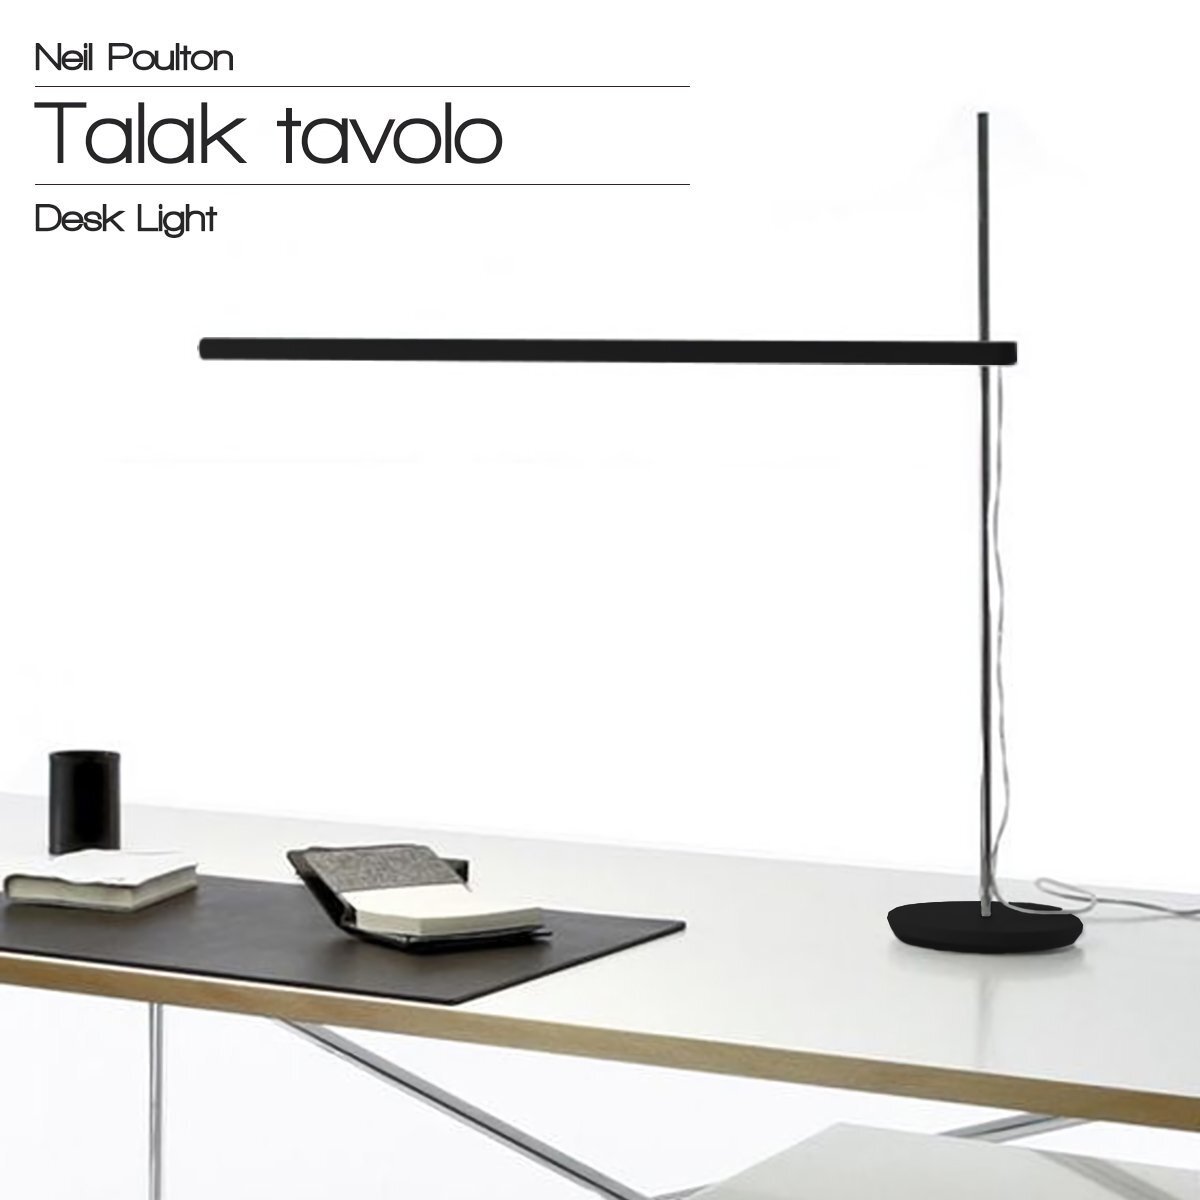 Talak Tavolo タラク タボロ Neil Poulton ニール・ポールトン デスクライト スタンドライト LED デザイナーズ照明 オフィス照明 DL-09BK